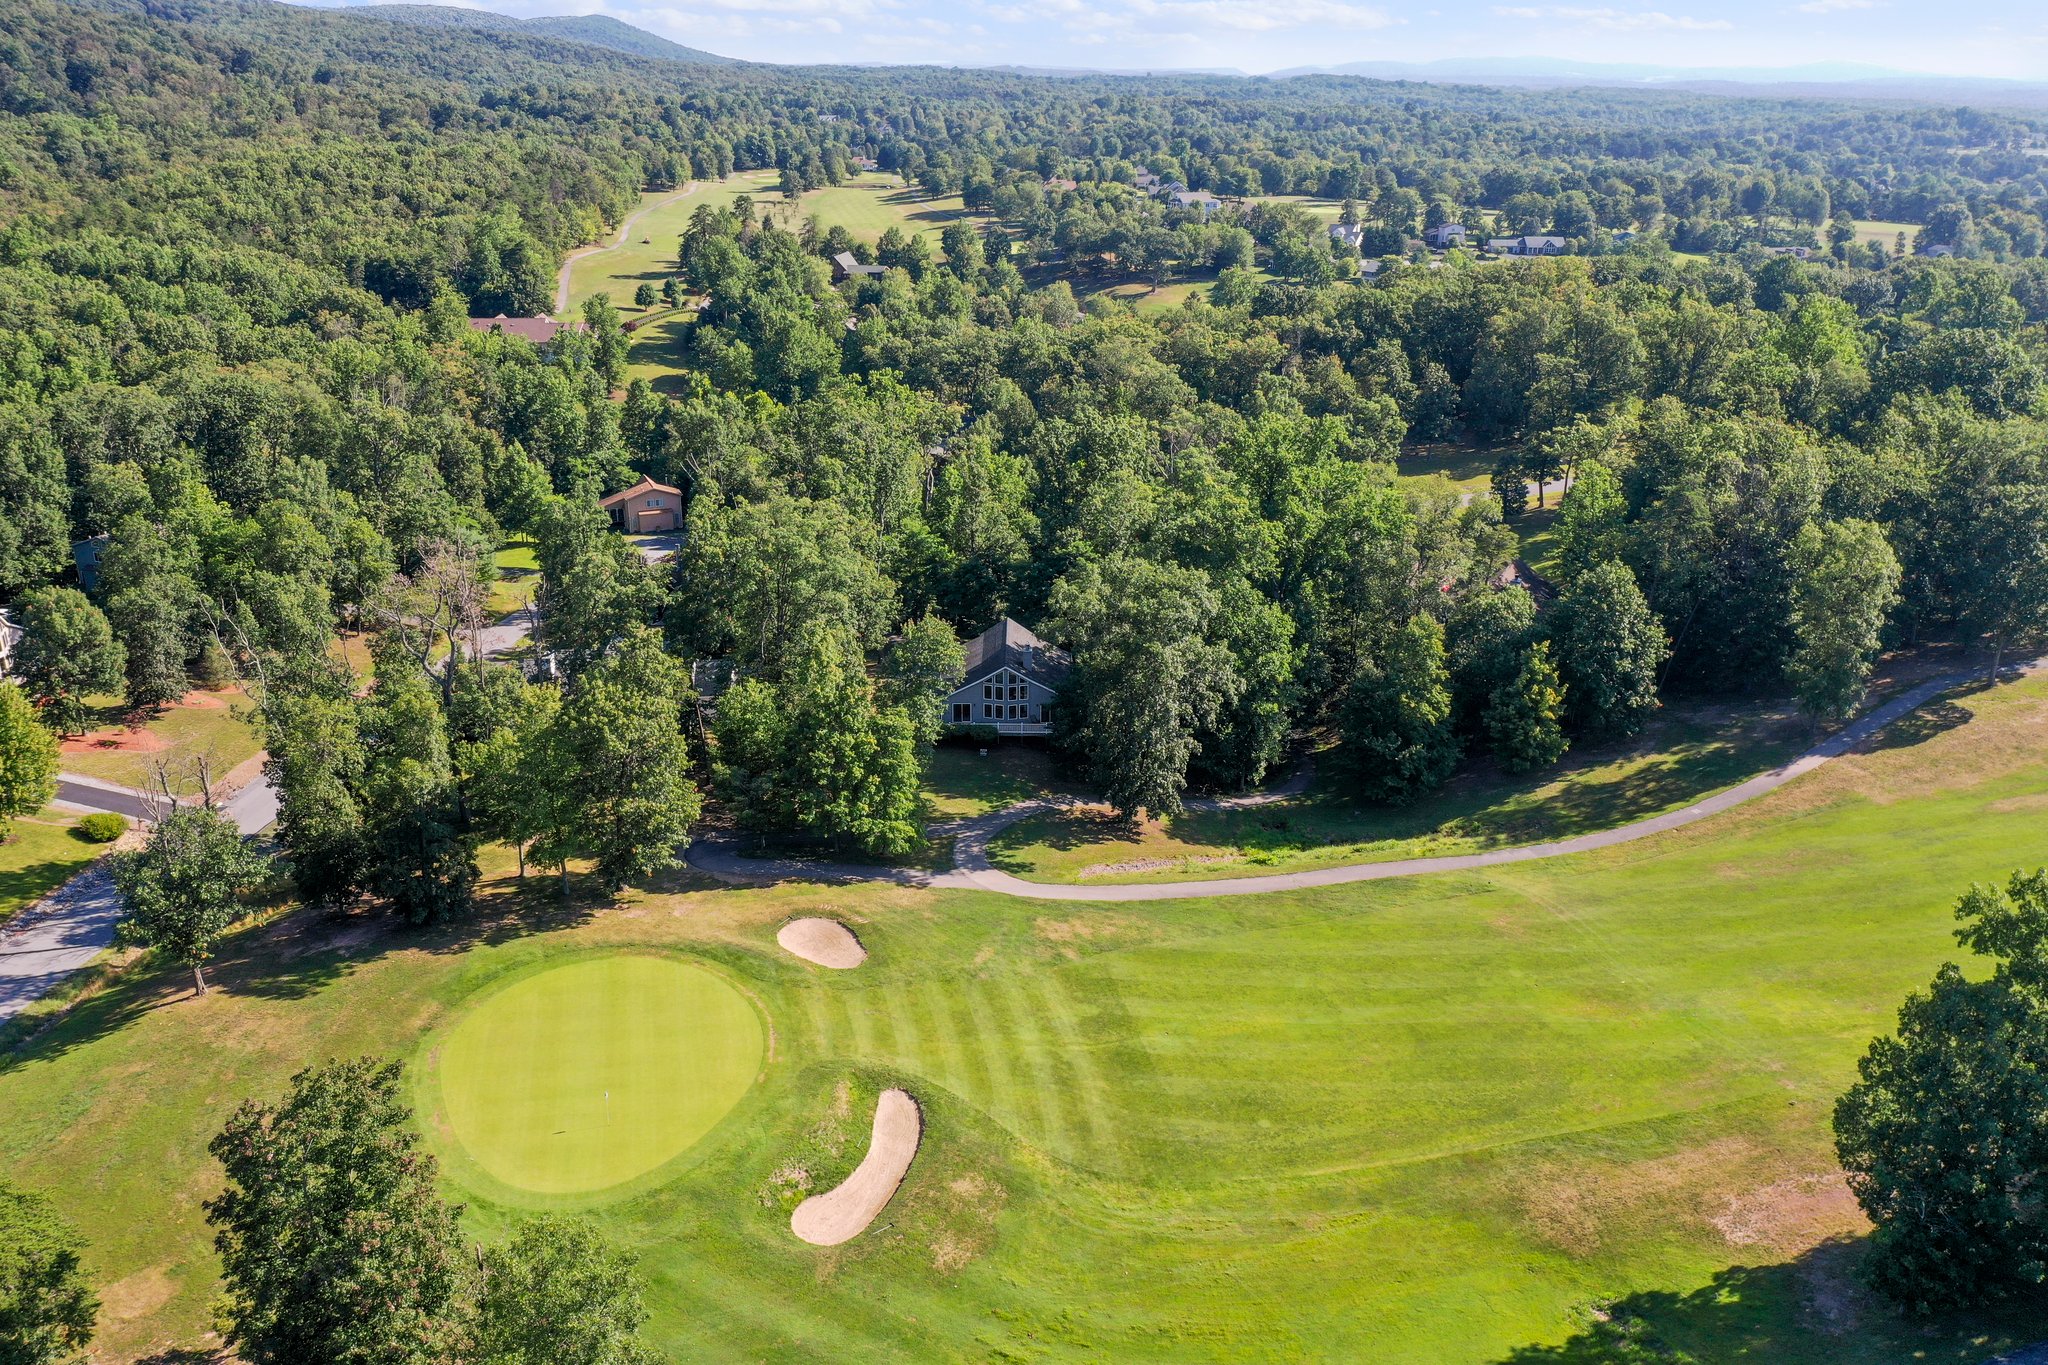 The Mountain View Golf Course